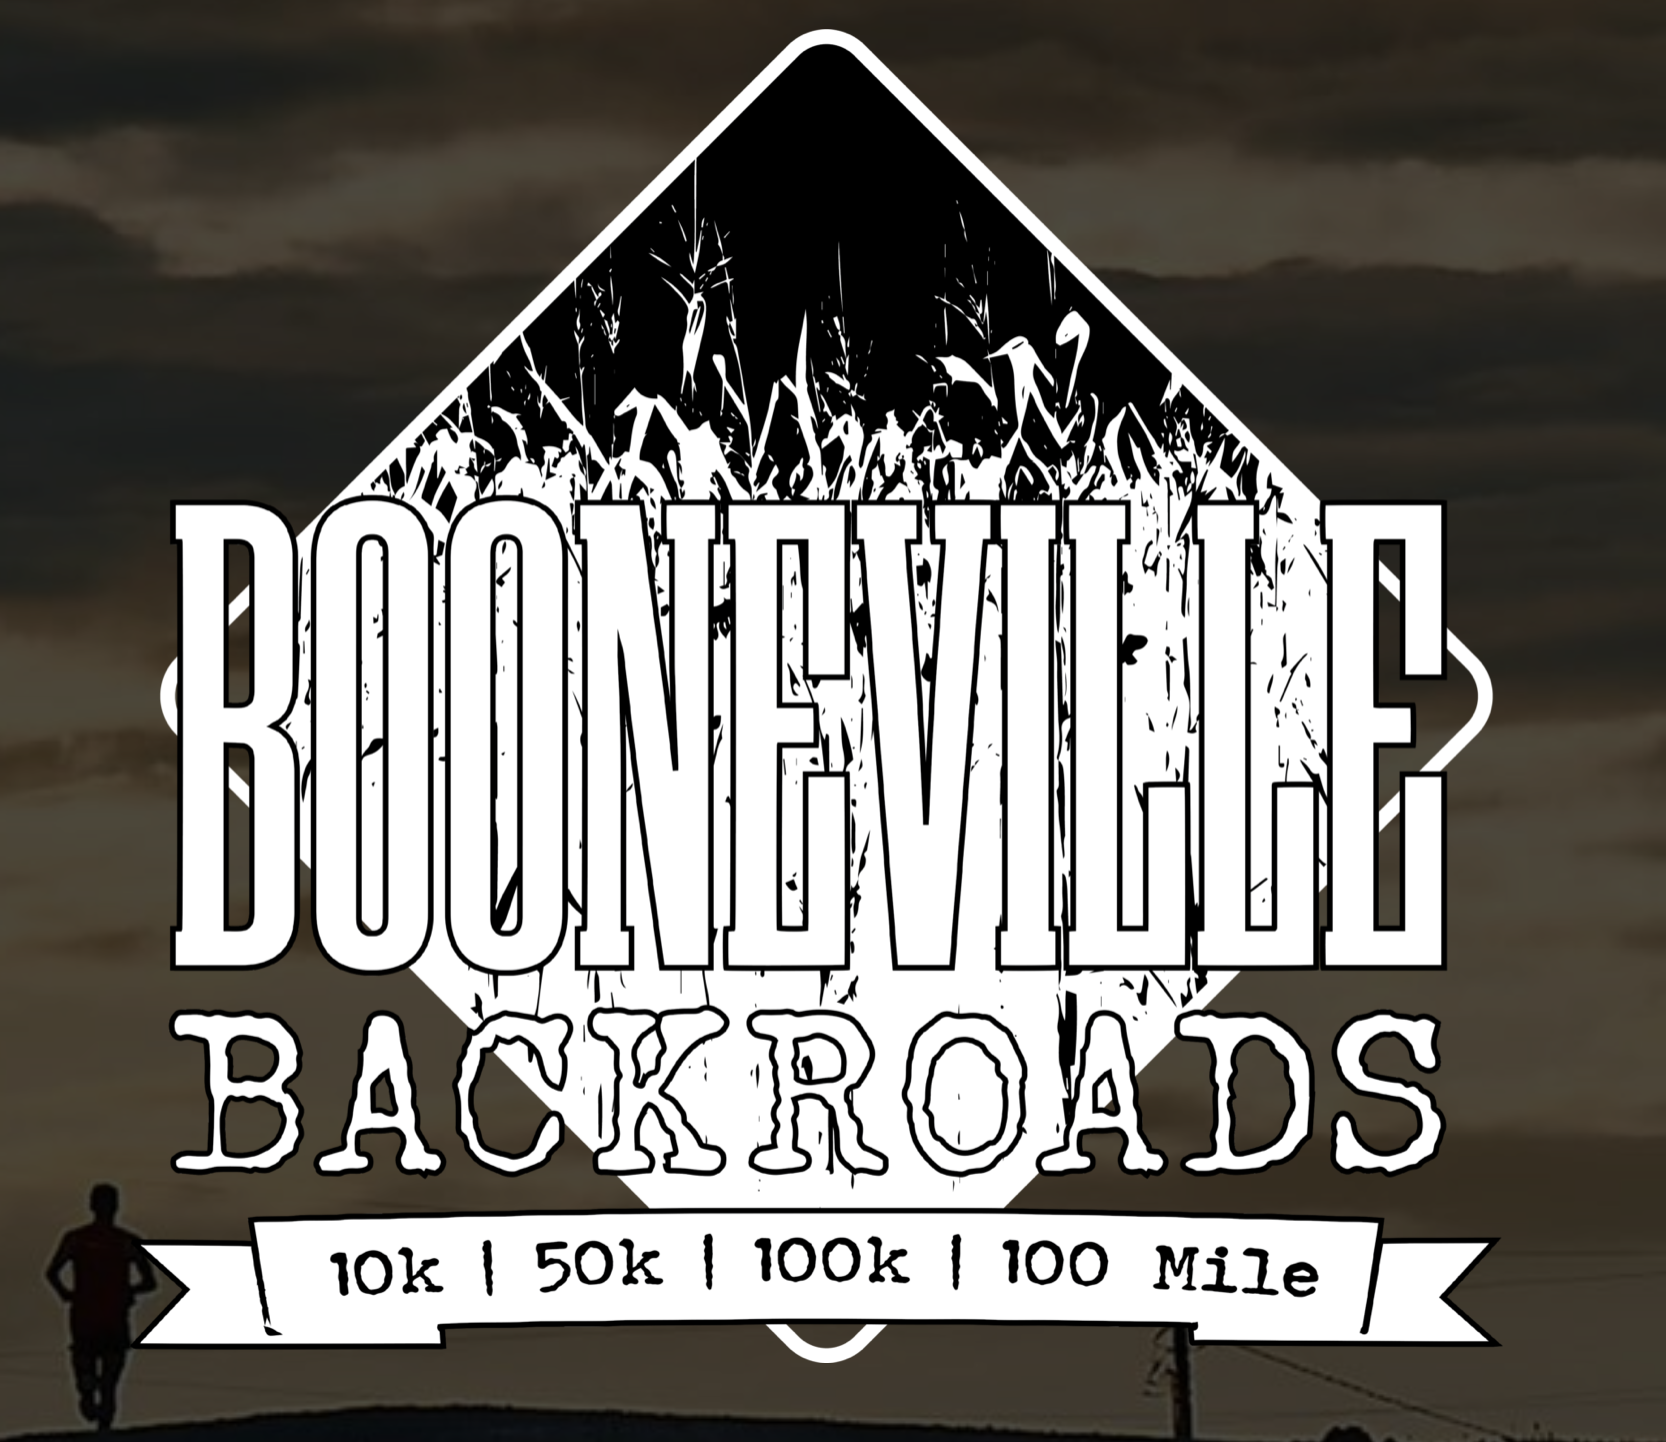 Booneville Backroads Ultra logo on RaceRaves